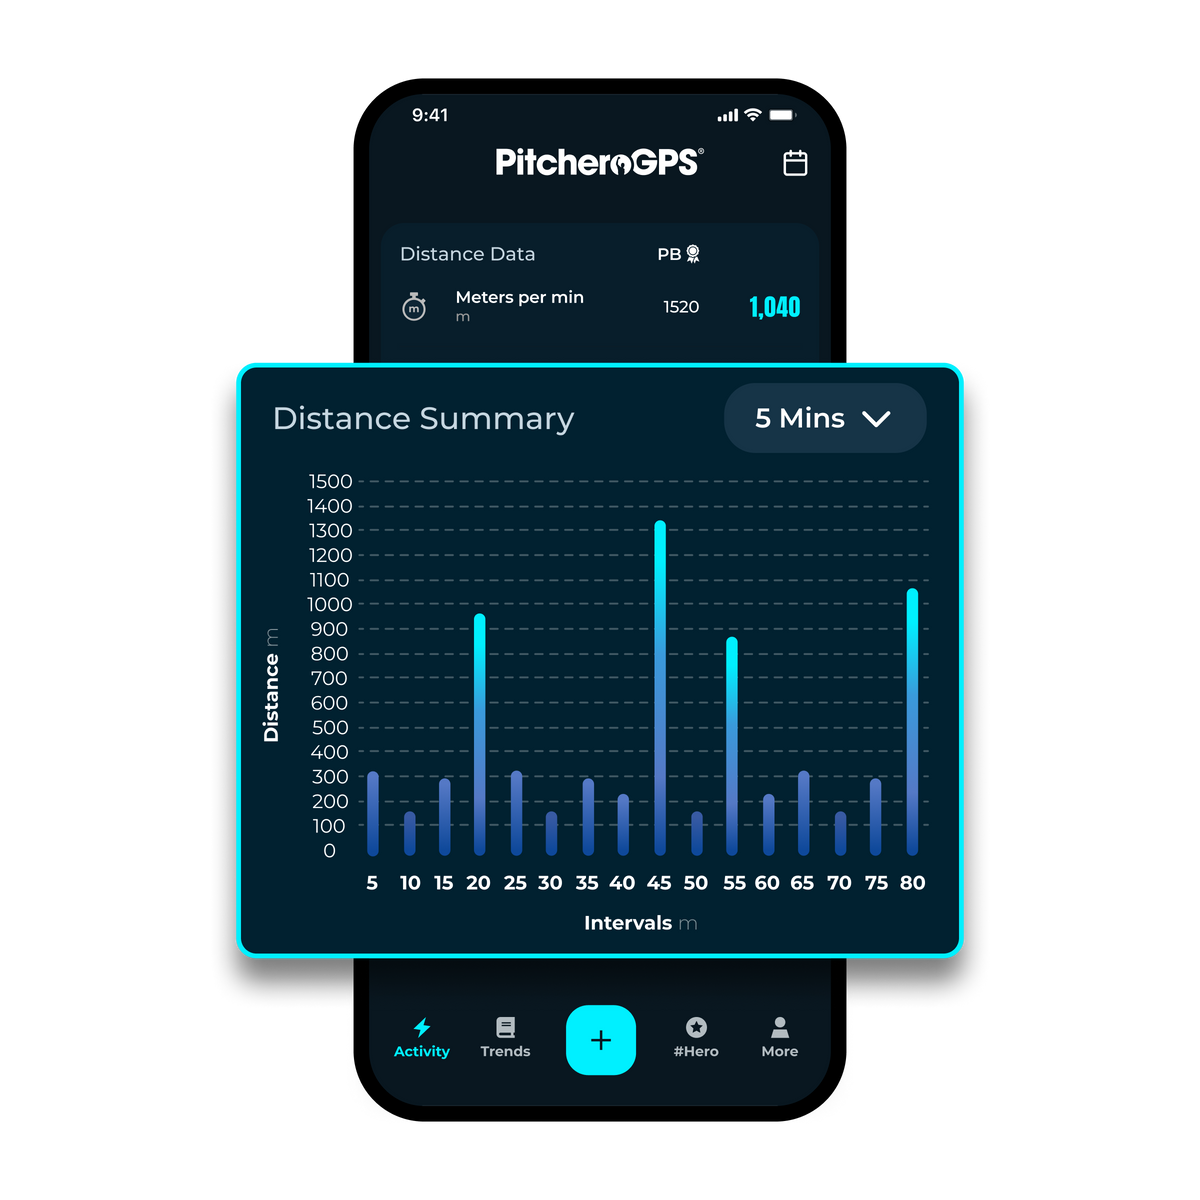 PitcheroGPS Player App showing distance data